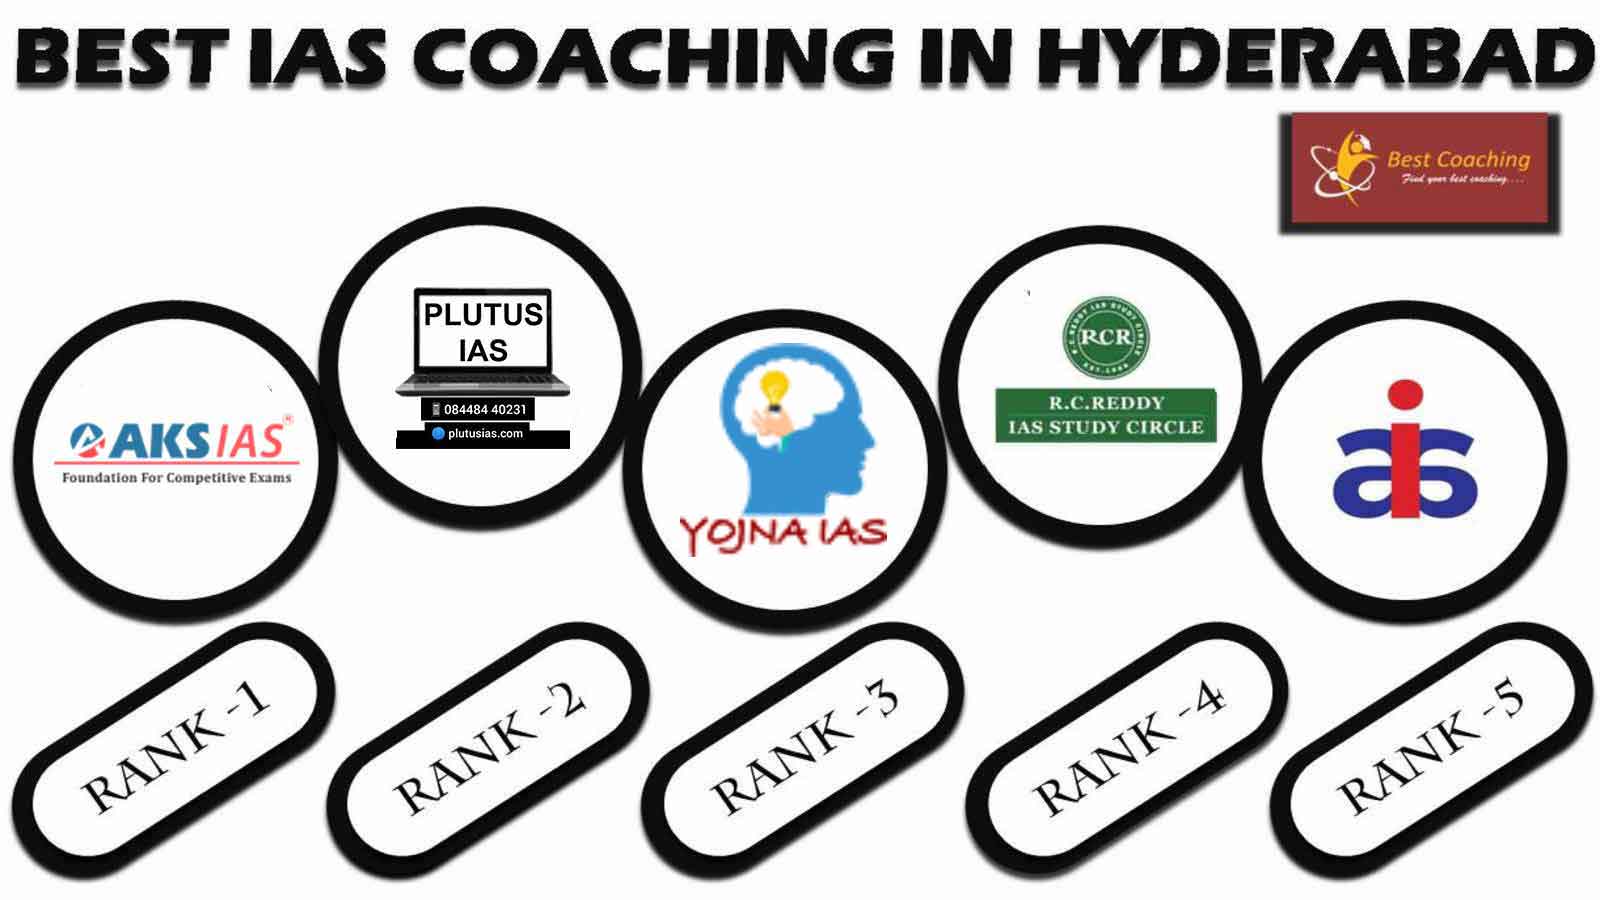 Top IAS Coaching in Hyderabad 2022